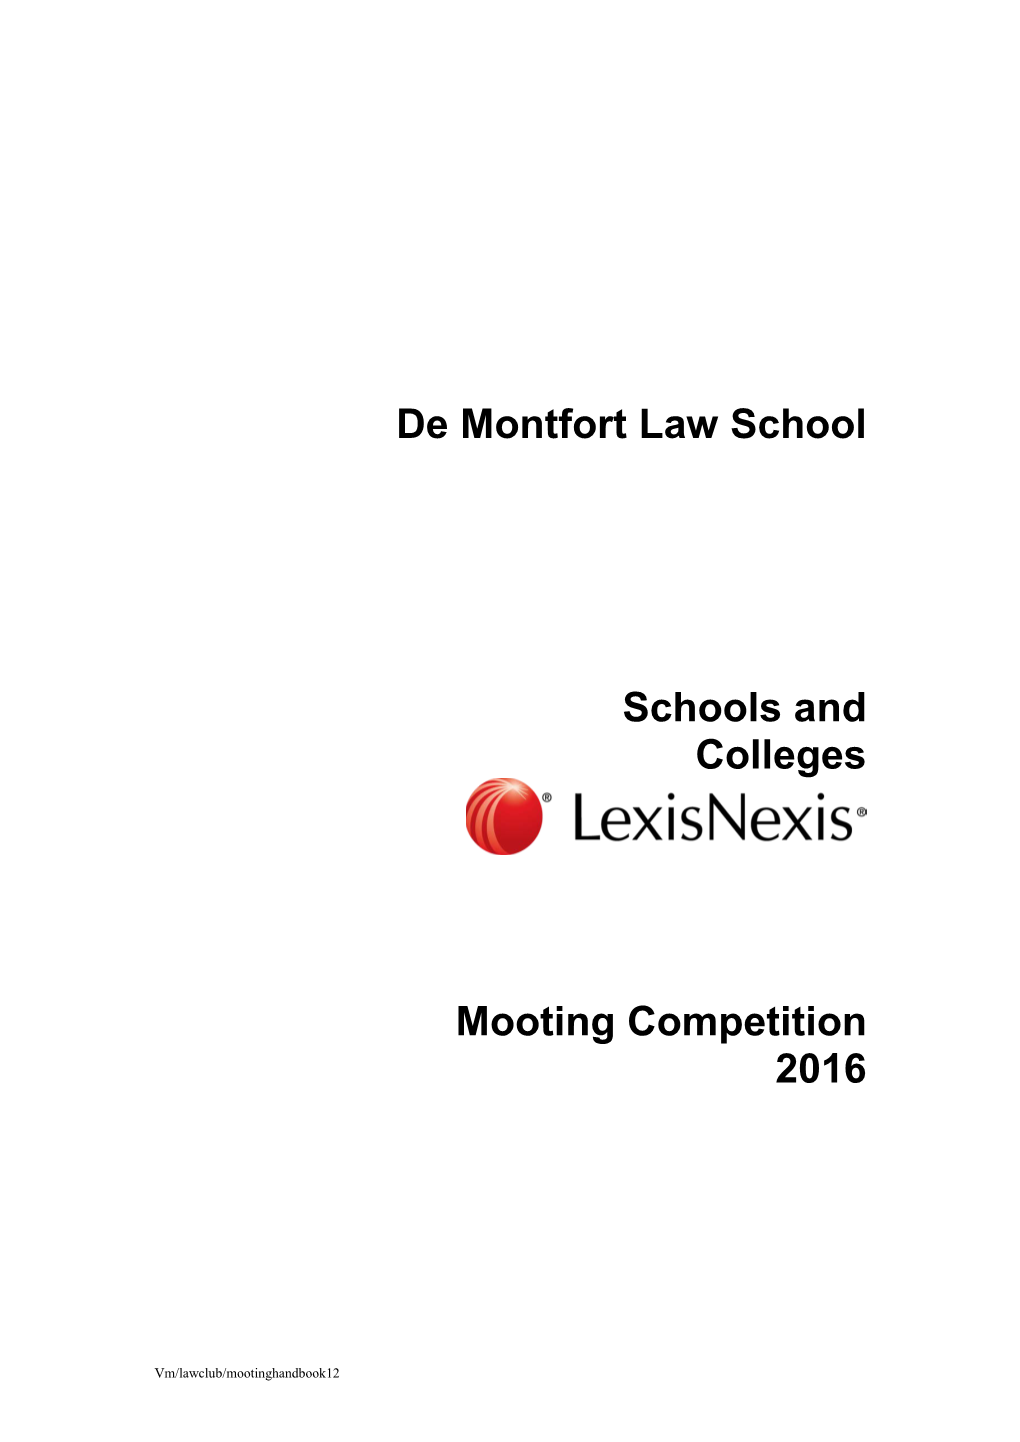 De Montfort Law School Schools and Colleges Mooting Competition 2016